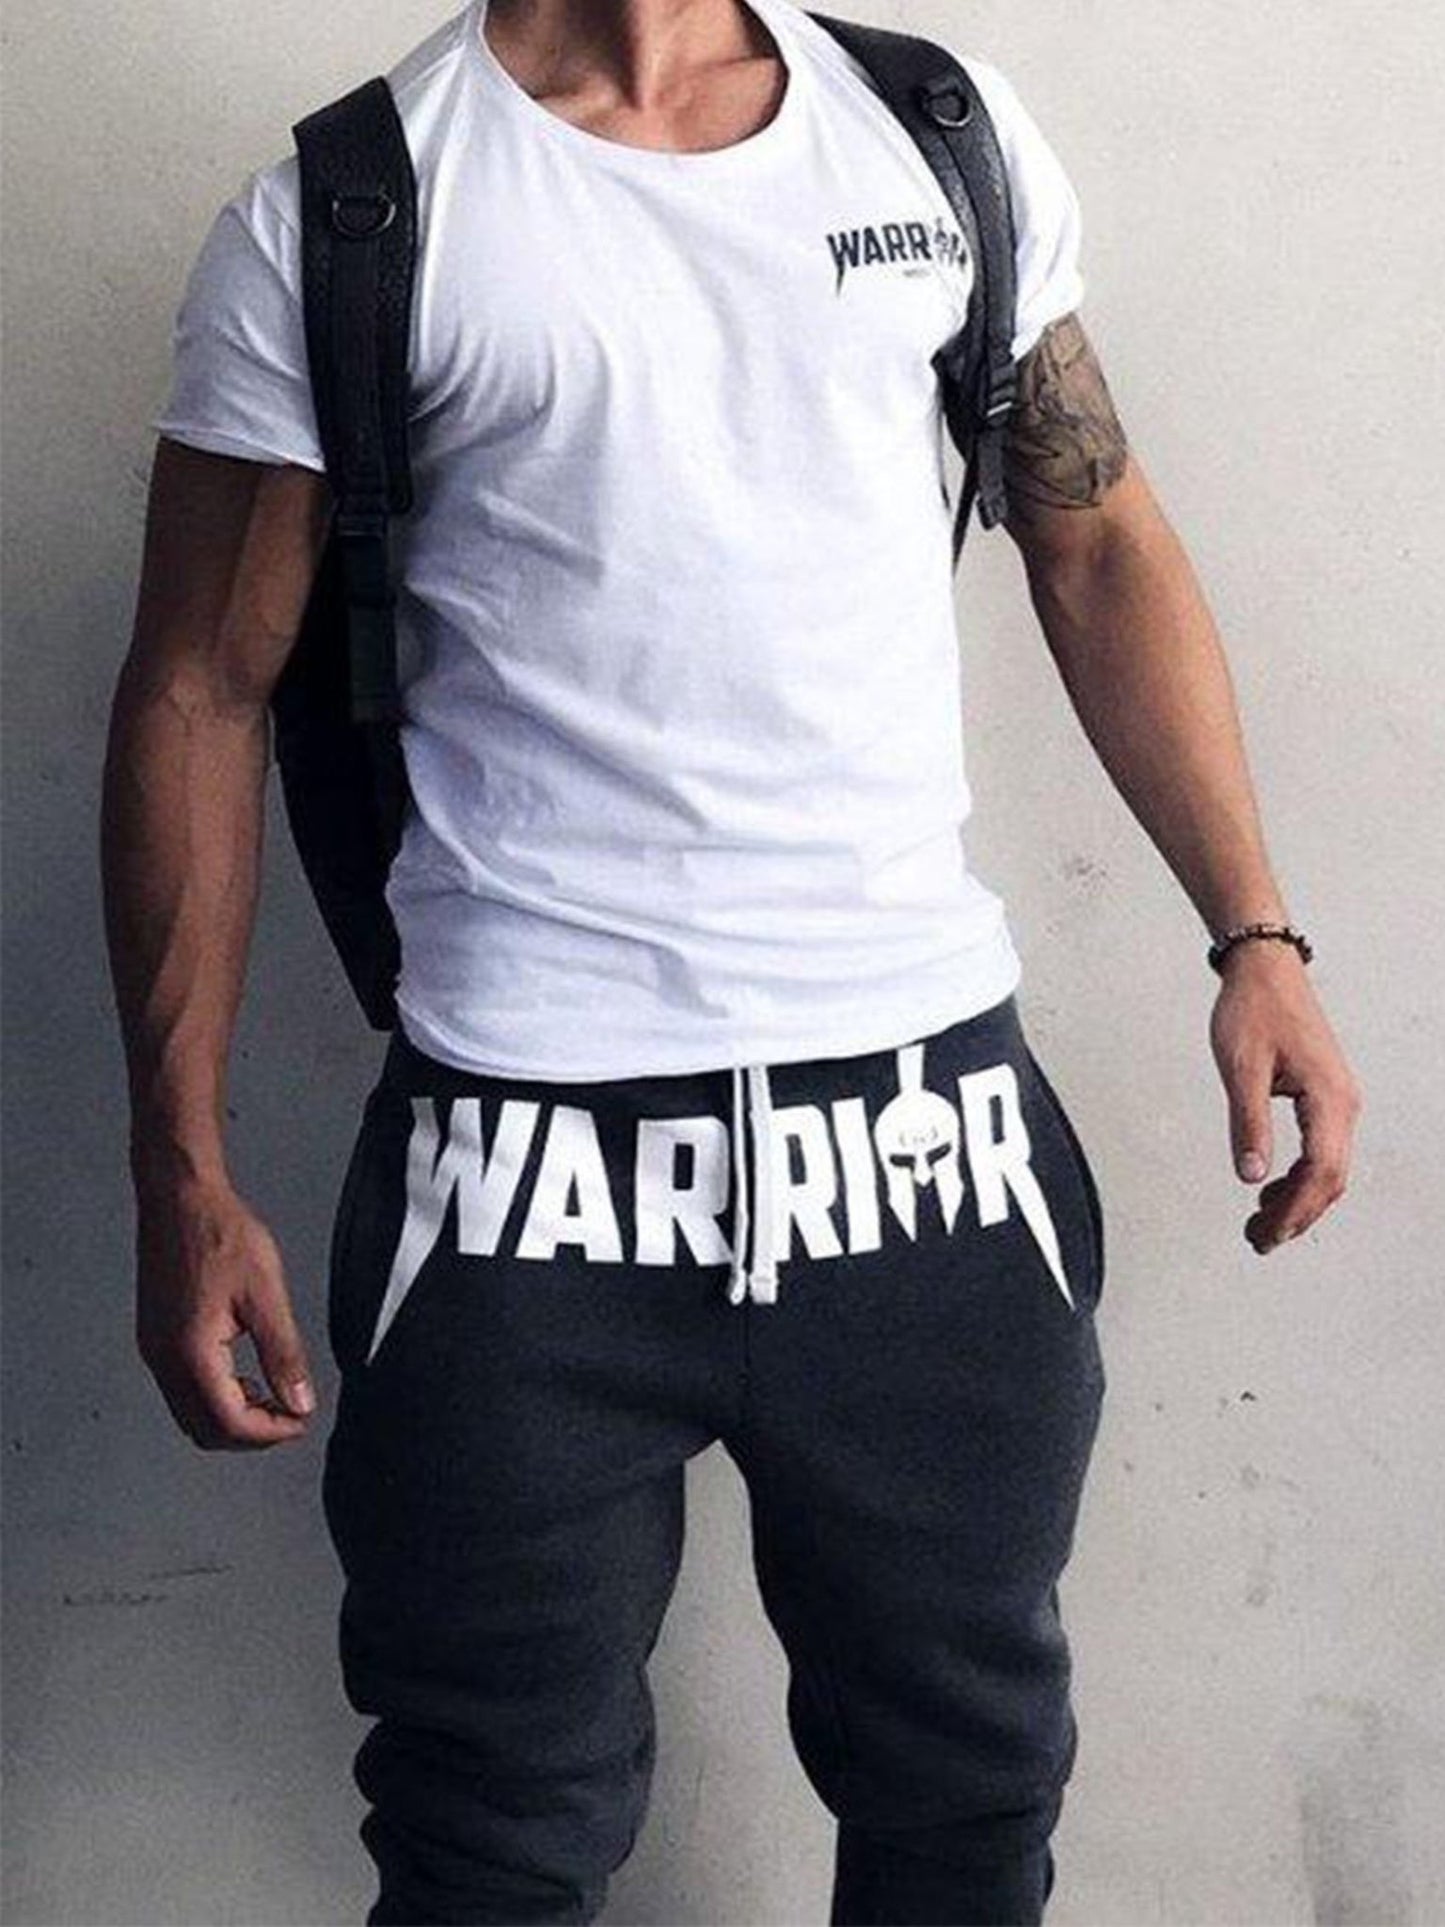 Gym Warrior Fitness Pants - Dark Gray